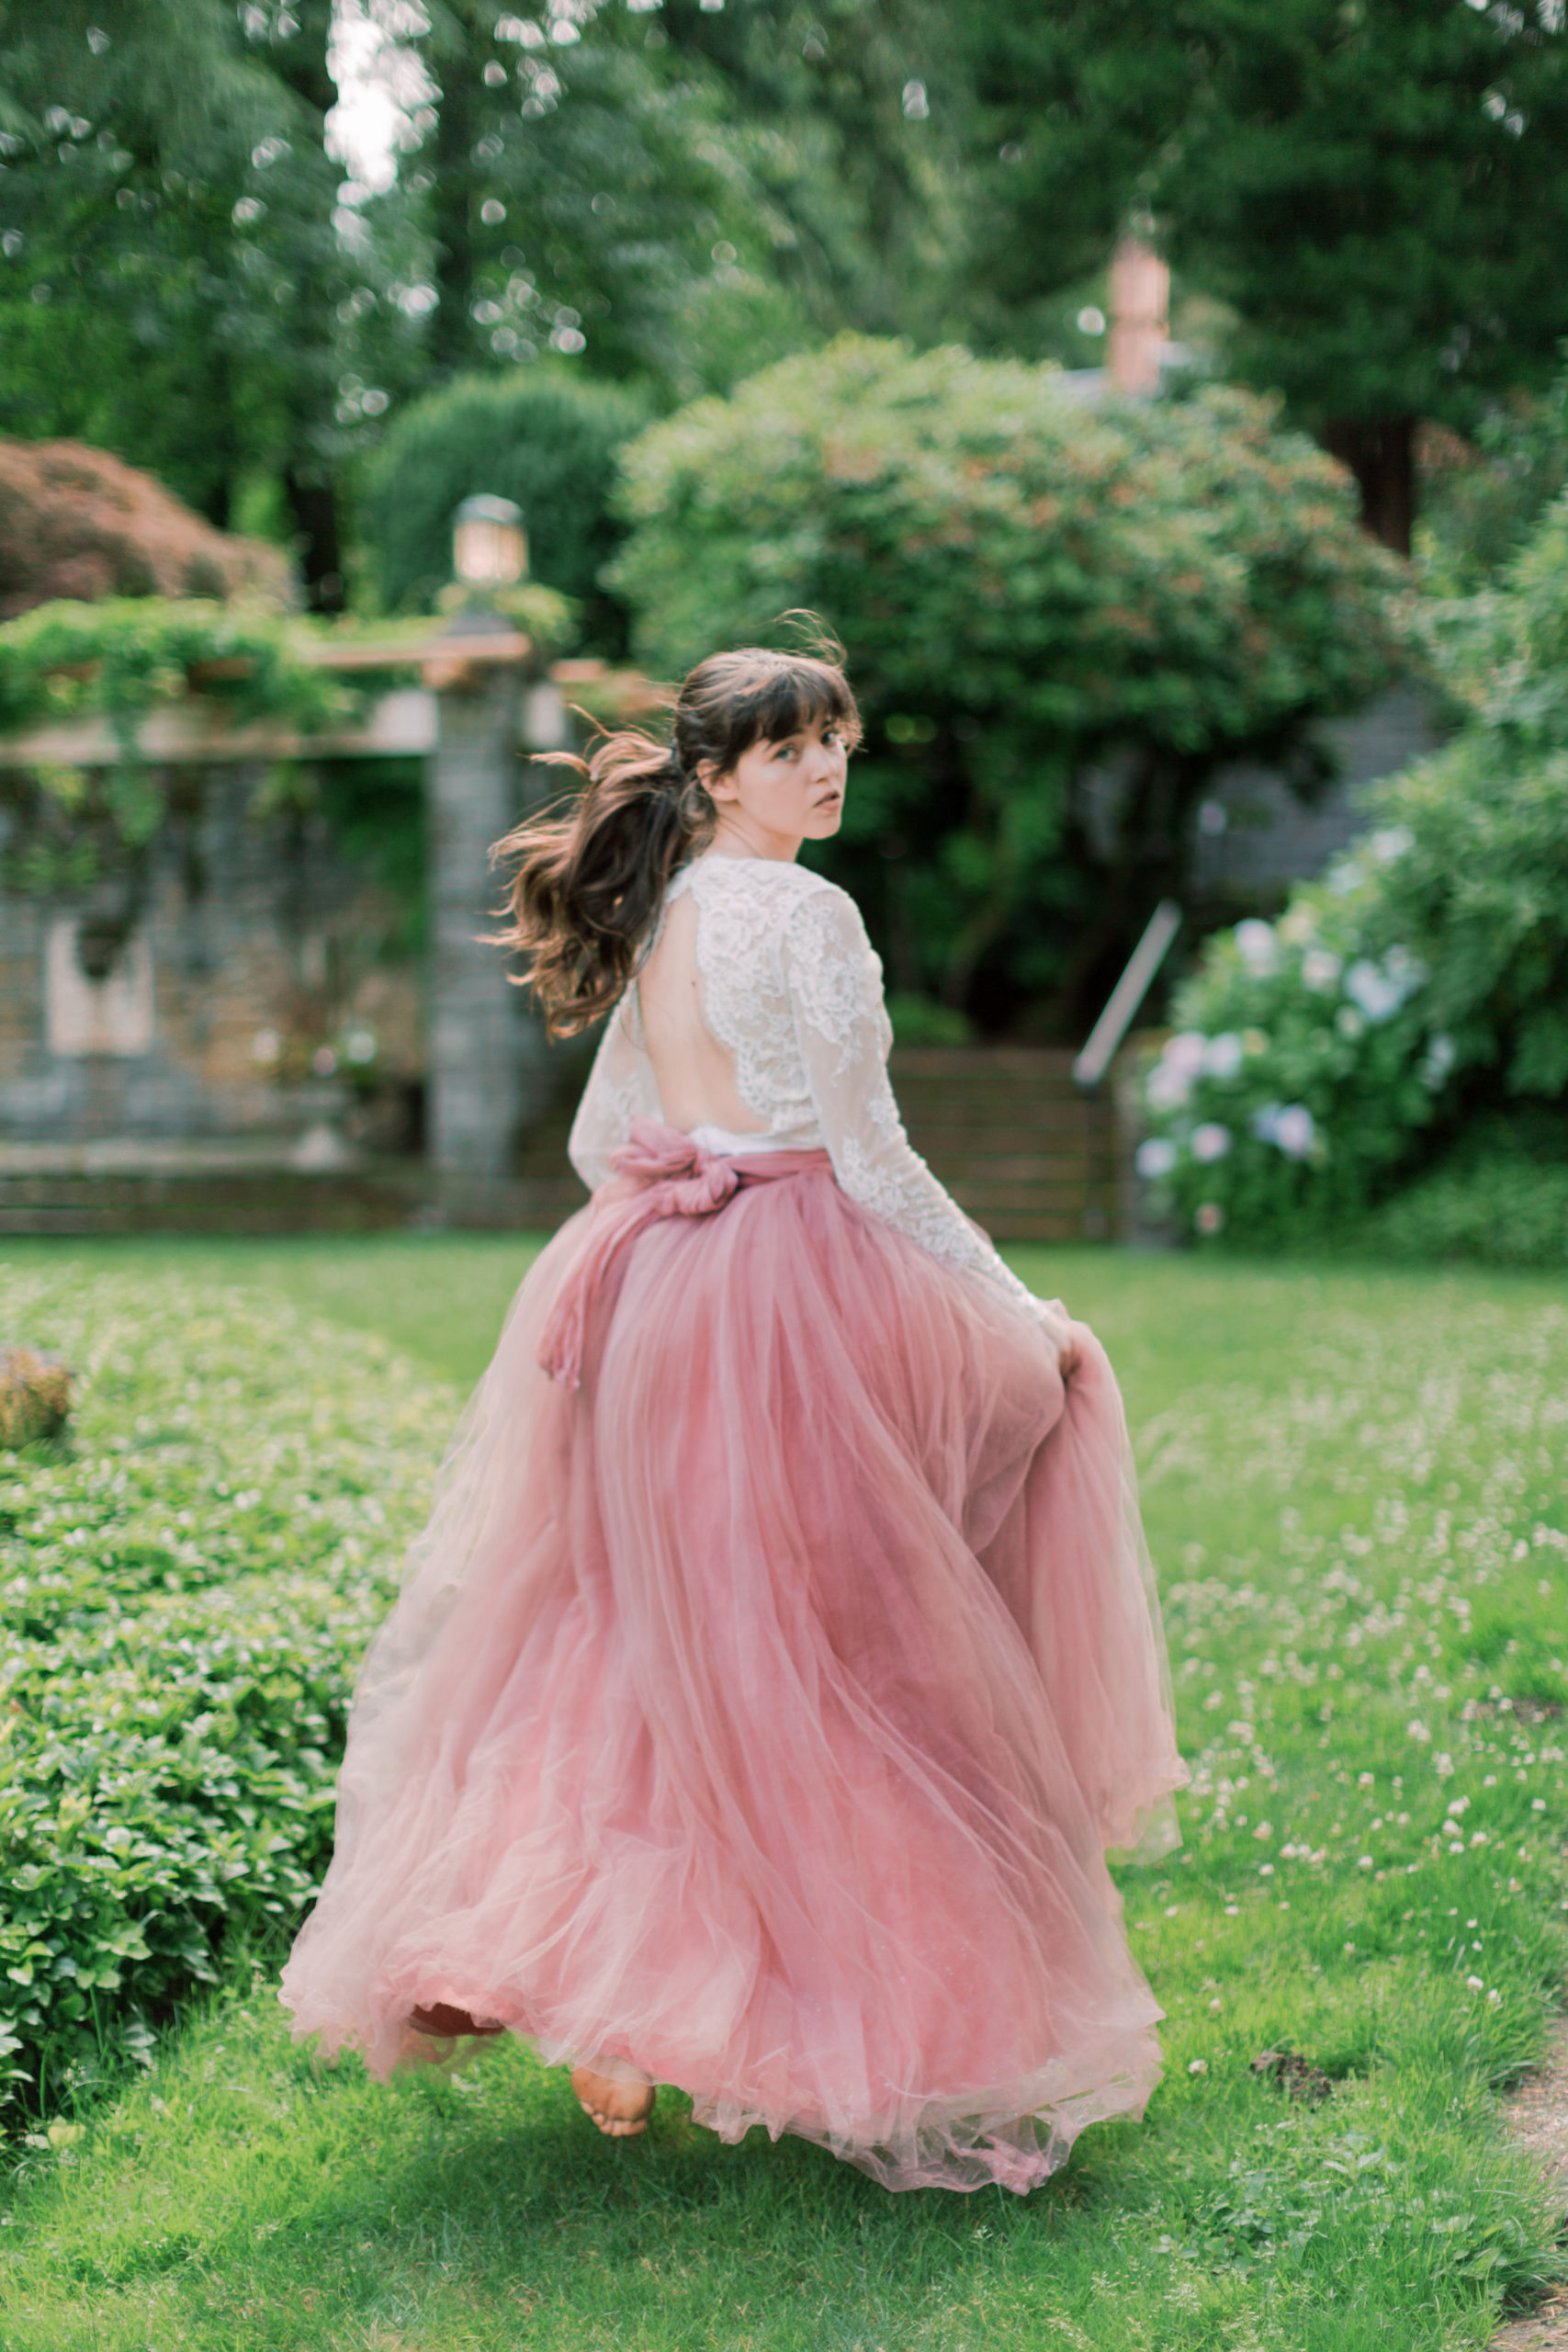 Bride runs away in beautiful pink gown